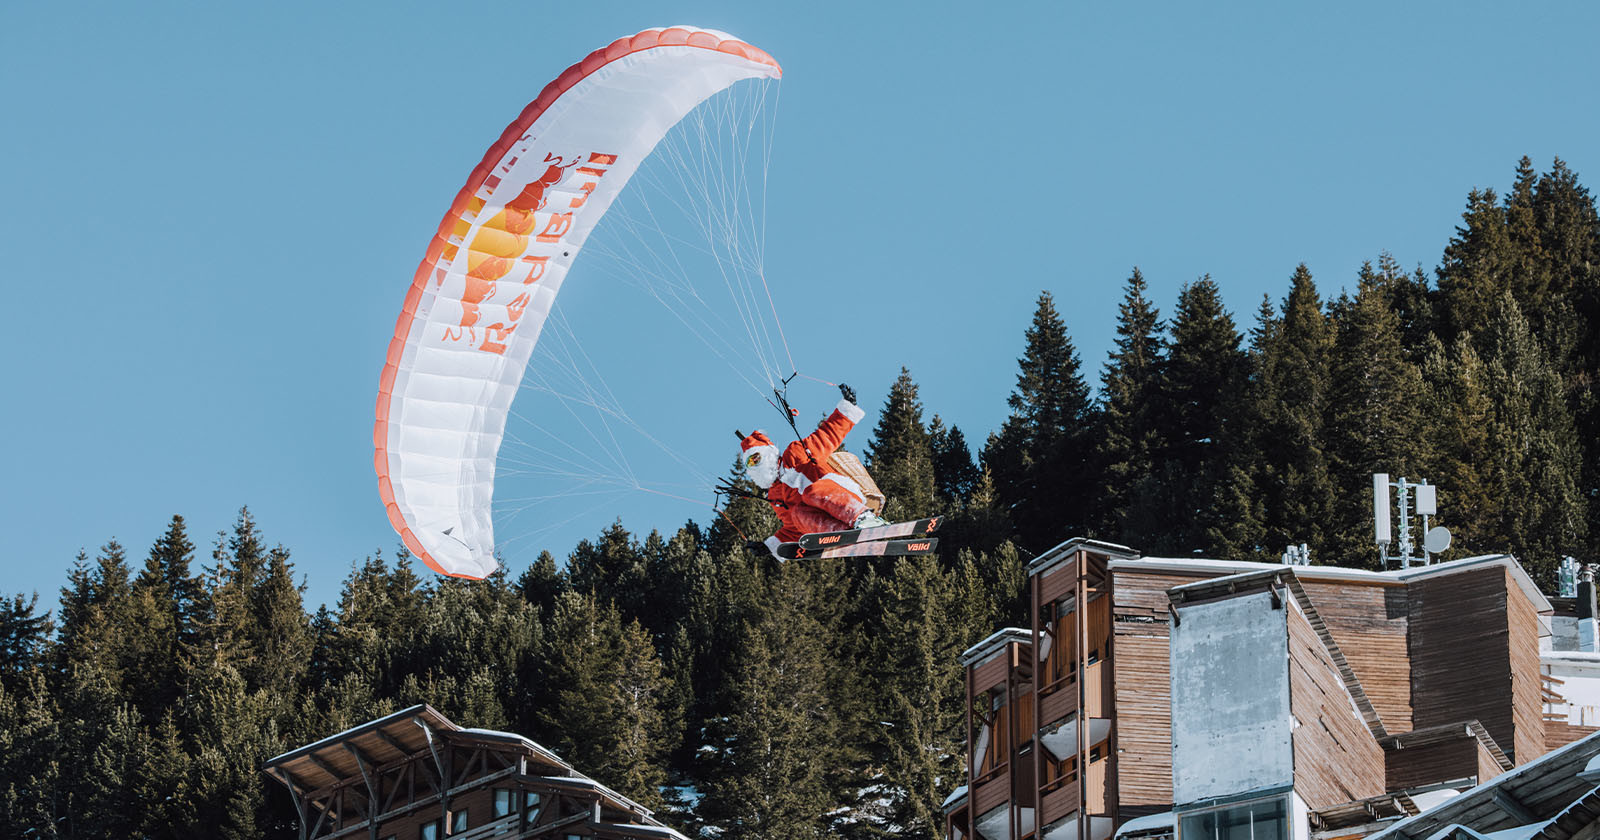 Santa Paraglides Through the Sky Throwing Cameras at People Below